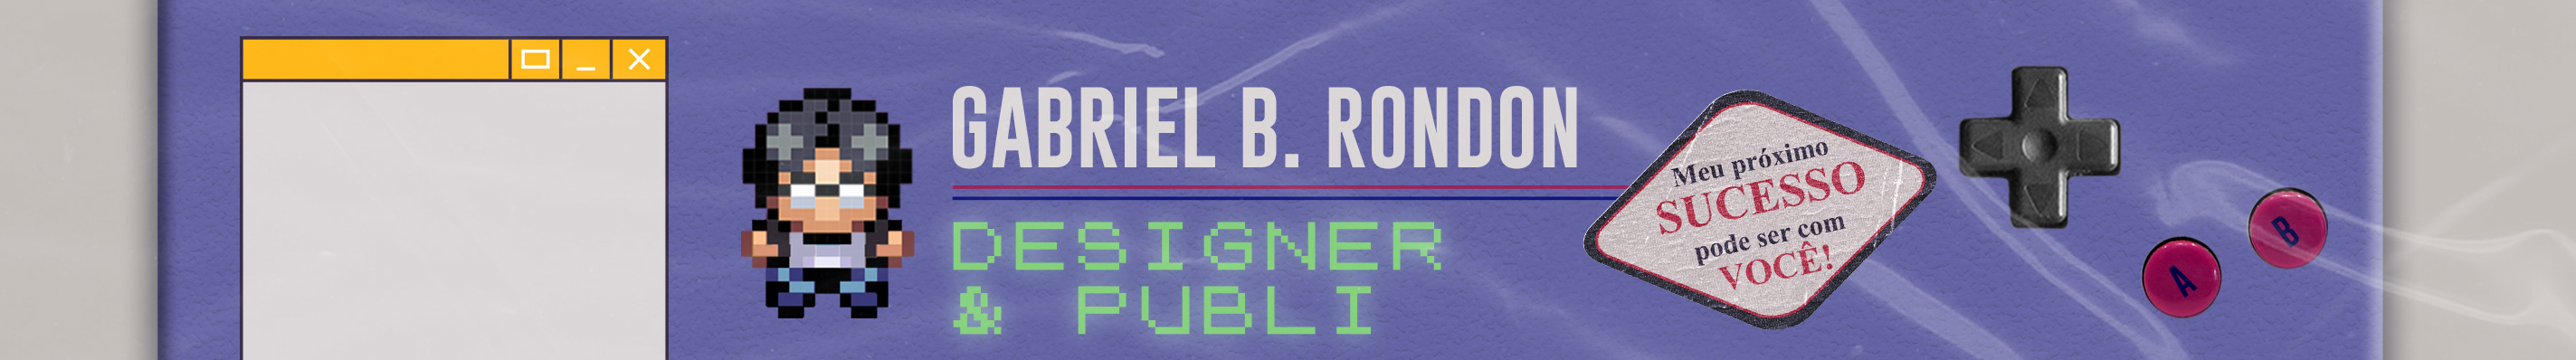 Banner profilu uživatele Gabriel Rondon